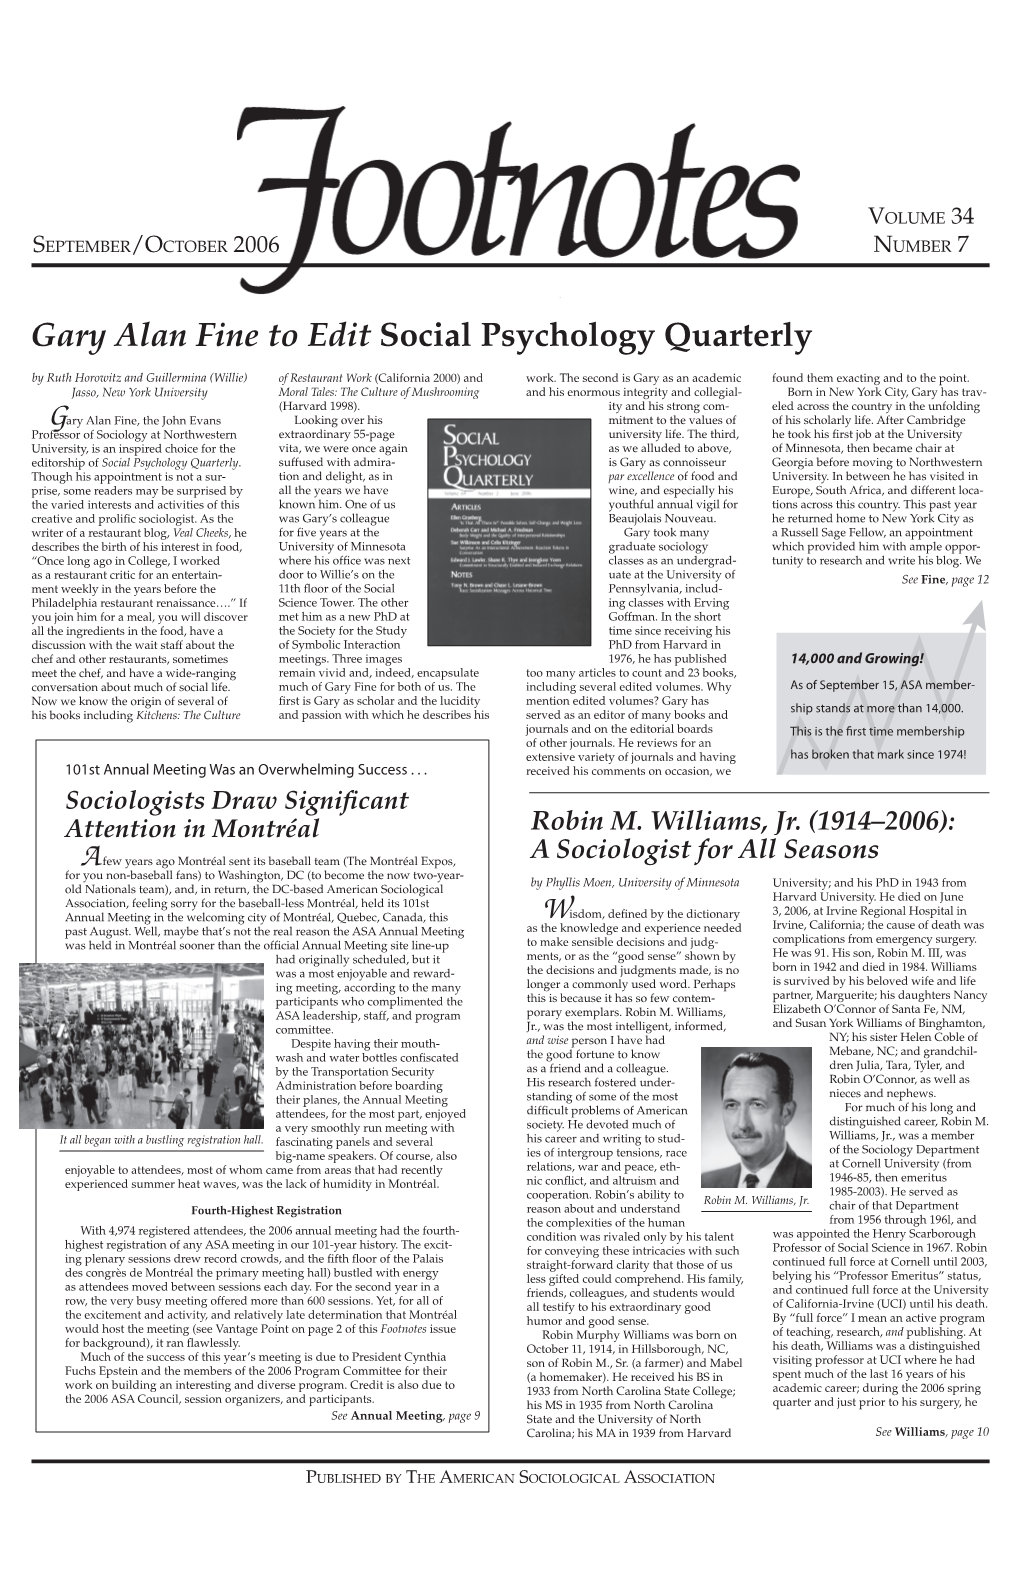 Gary Alan Fine to Edit Social Psychology Quarterly